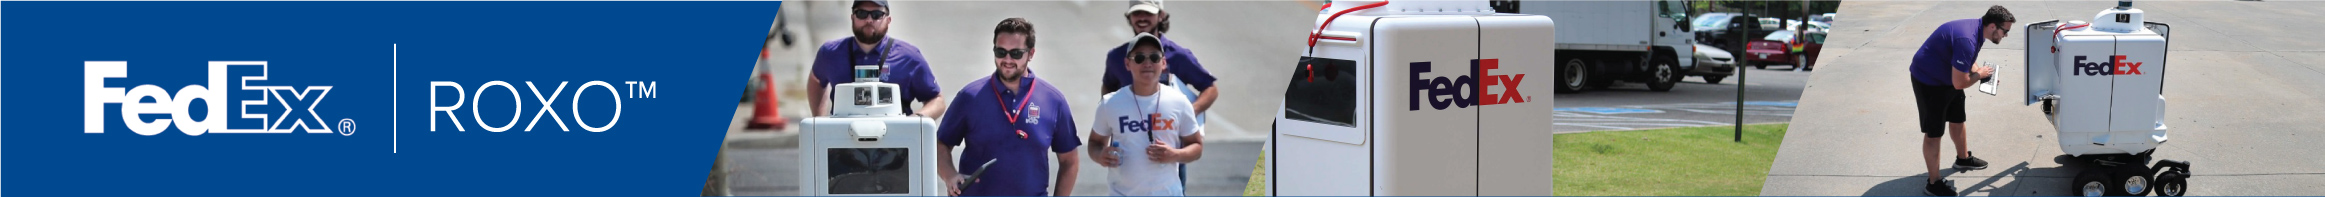 FedEx Roxo Testing Site